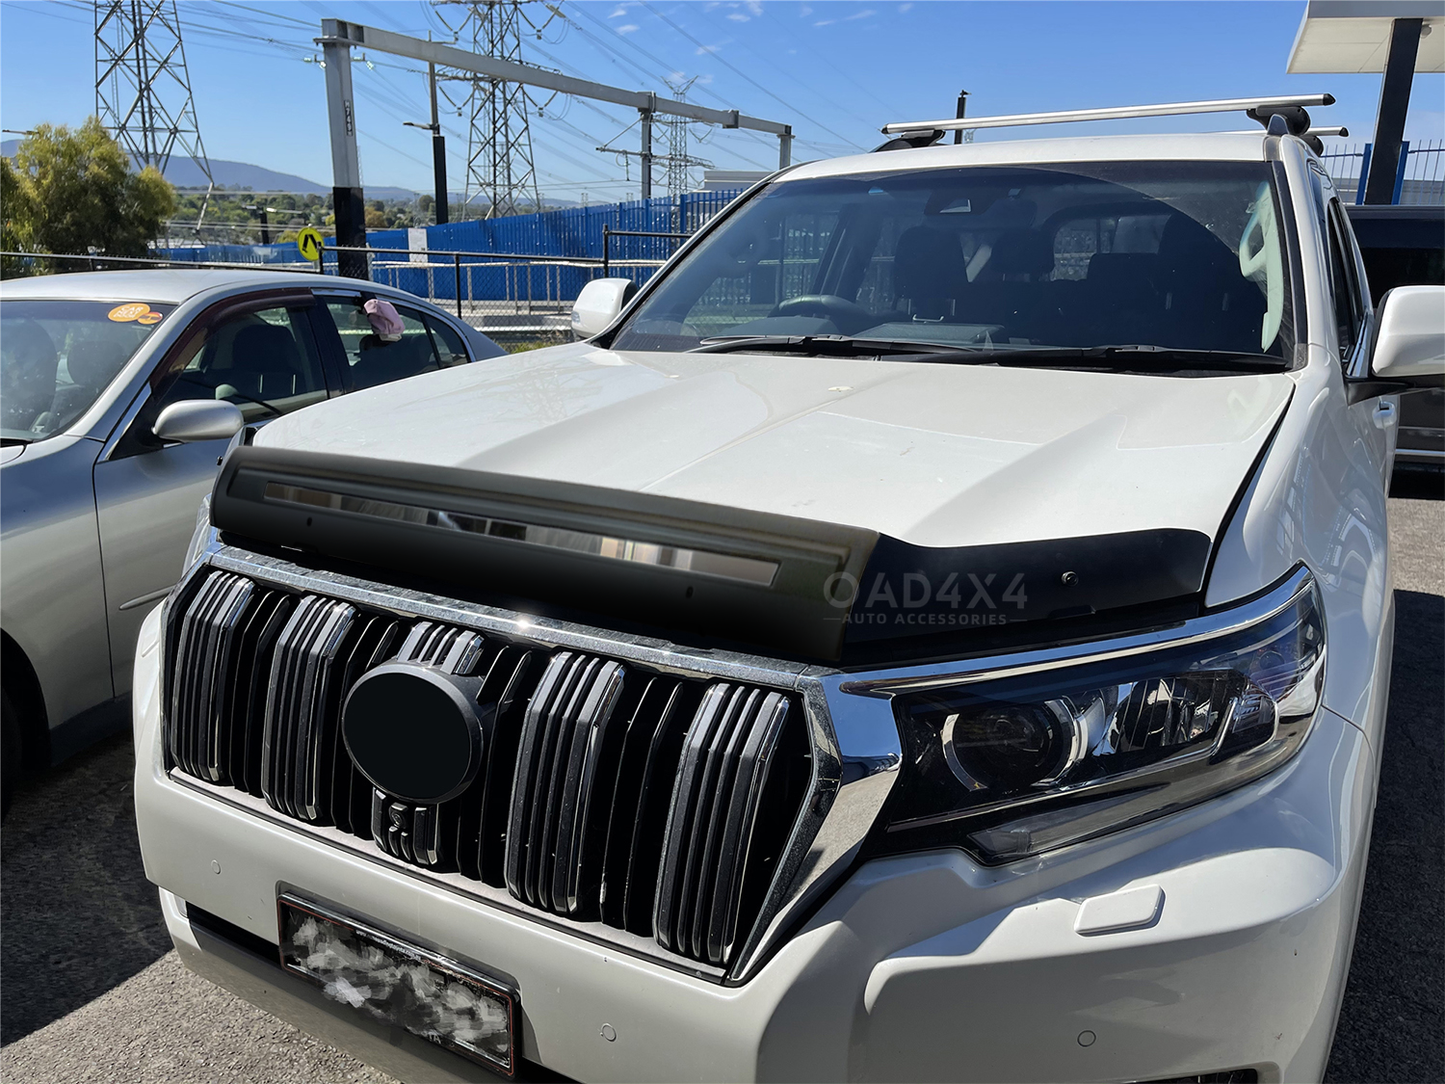 Injection Modeling Bonnet Protector for Toyota Land Cruiser Prado 150 2018-Onwards Hood Protector Bonnet Guard